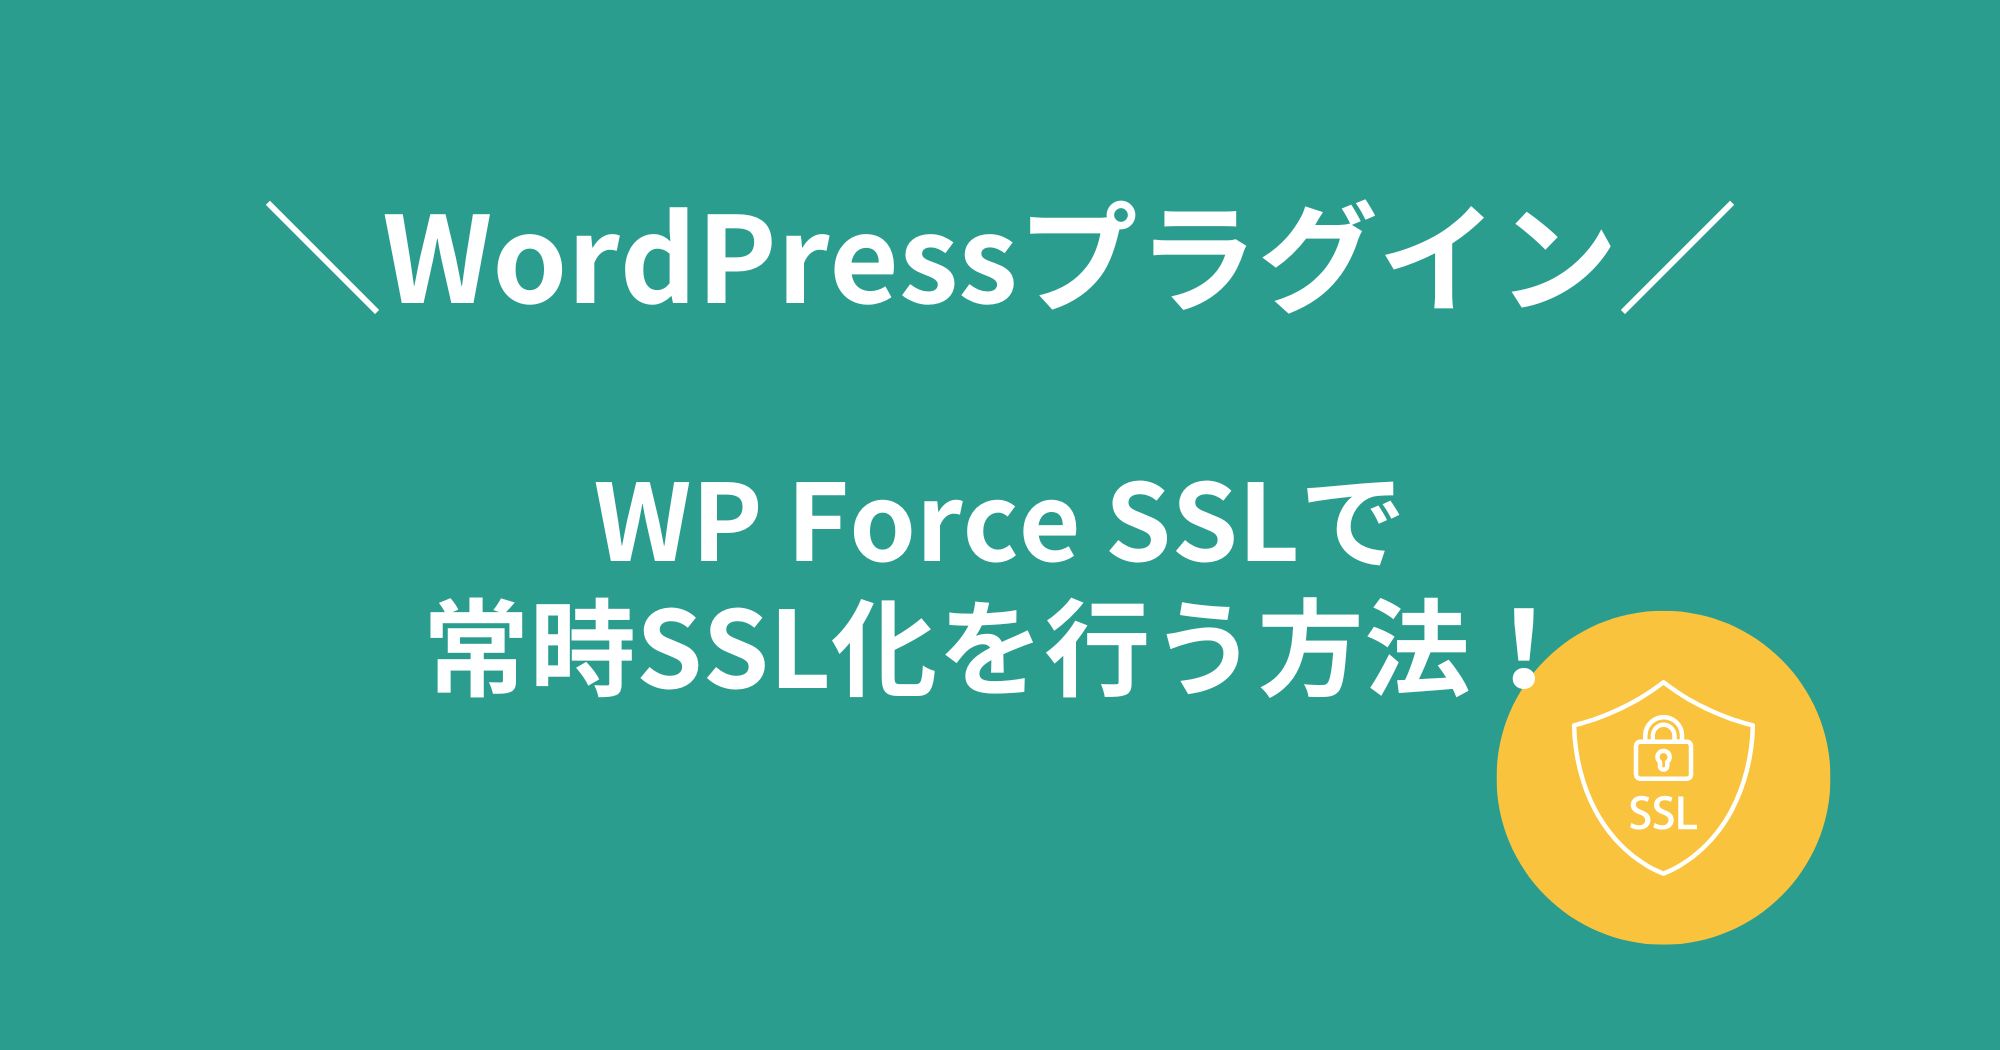 WordPressプラグイン「WP Force SSL」で常時SSL化を行う方法を詳しく解説！